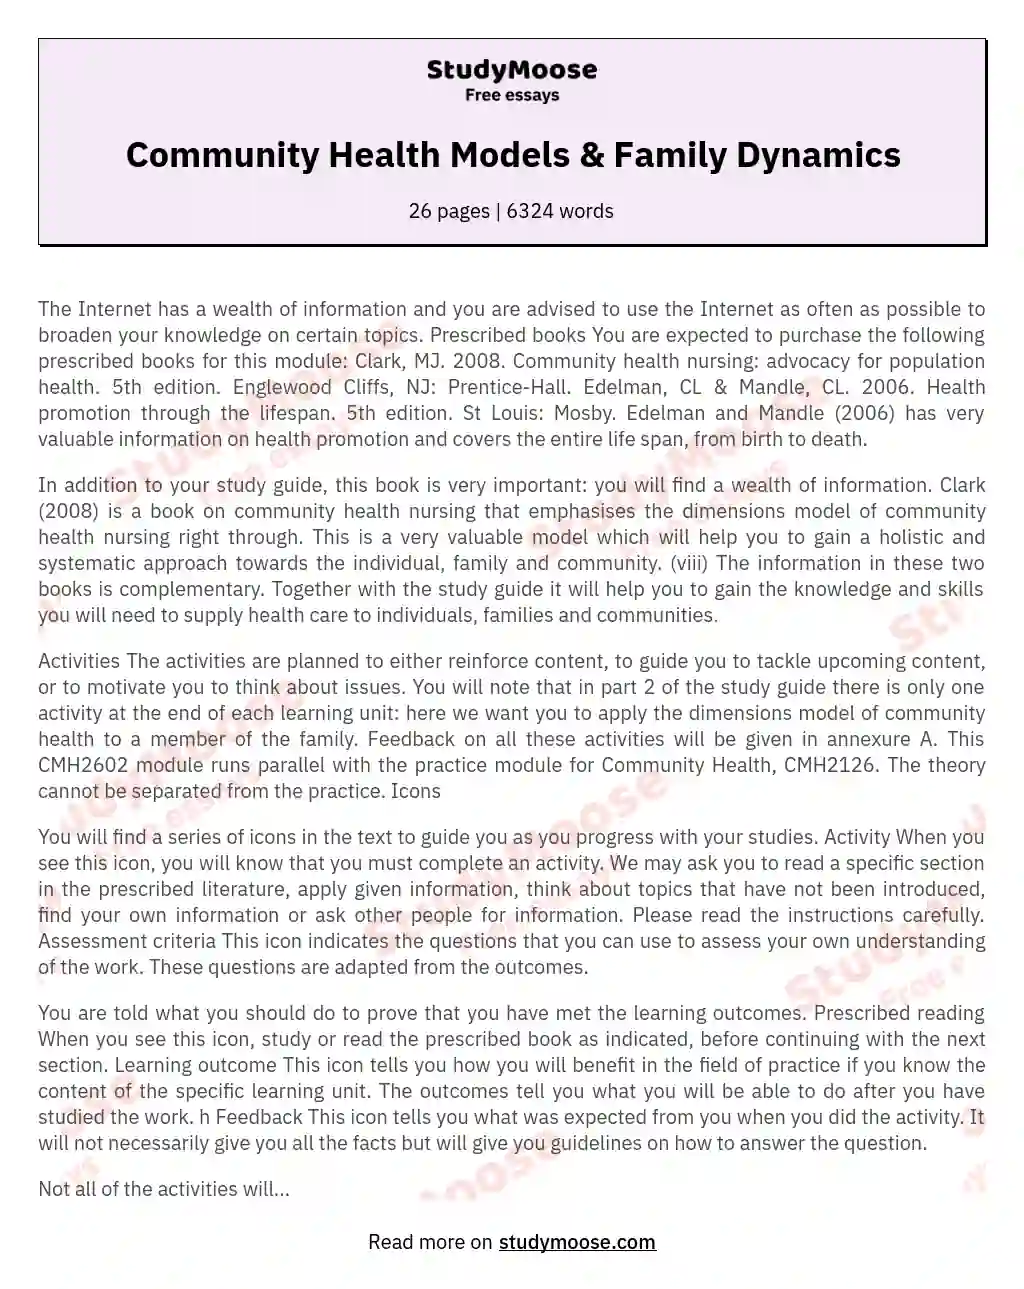 Community Health Models & Family Dynamics essay